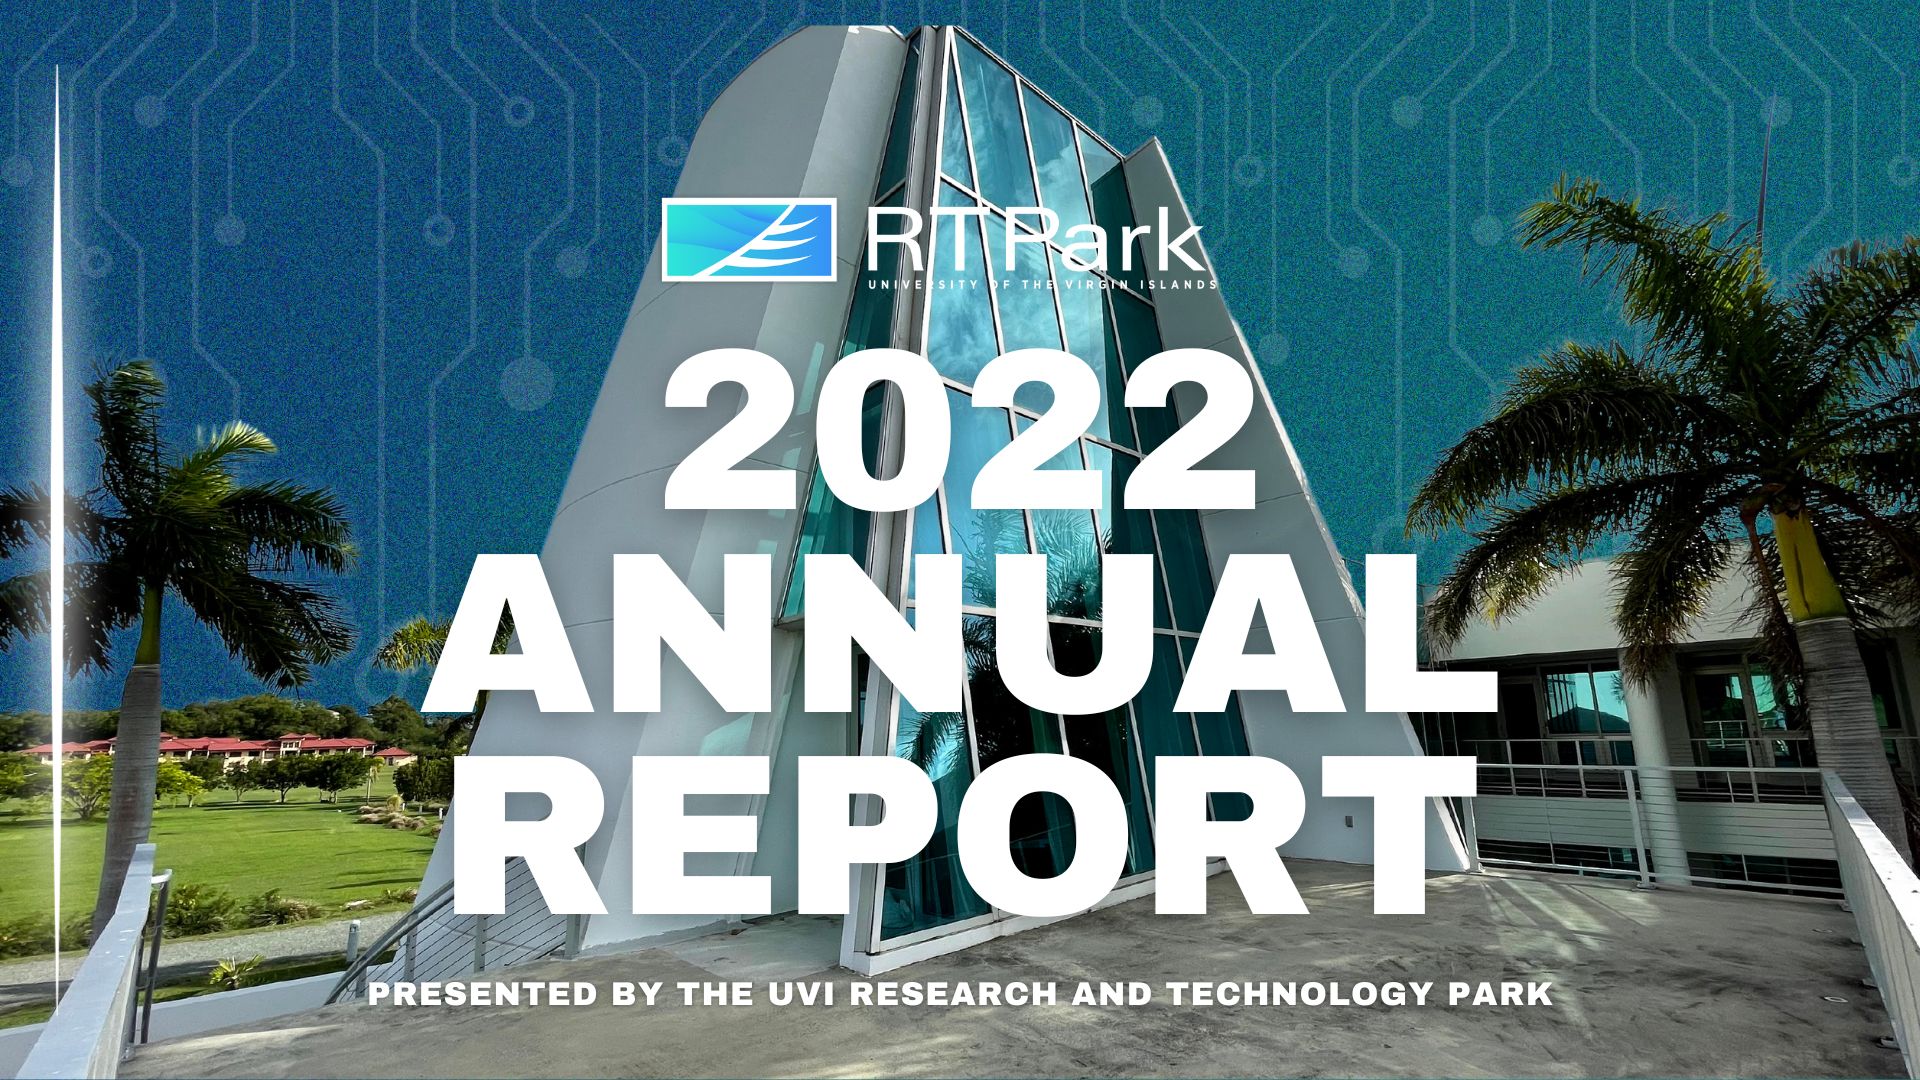 UVI RTPark Publishes 2022 Annual Report